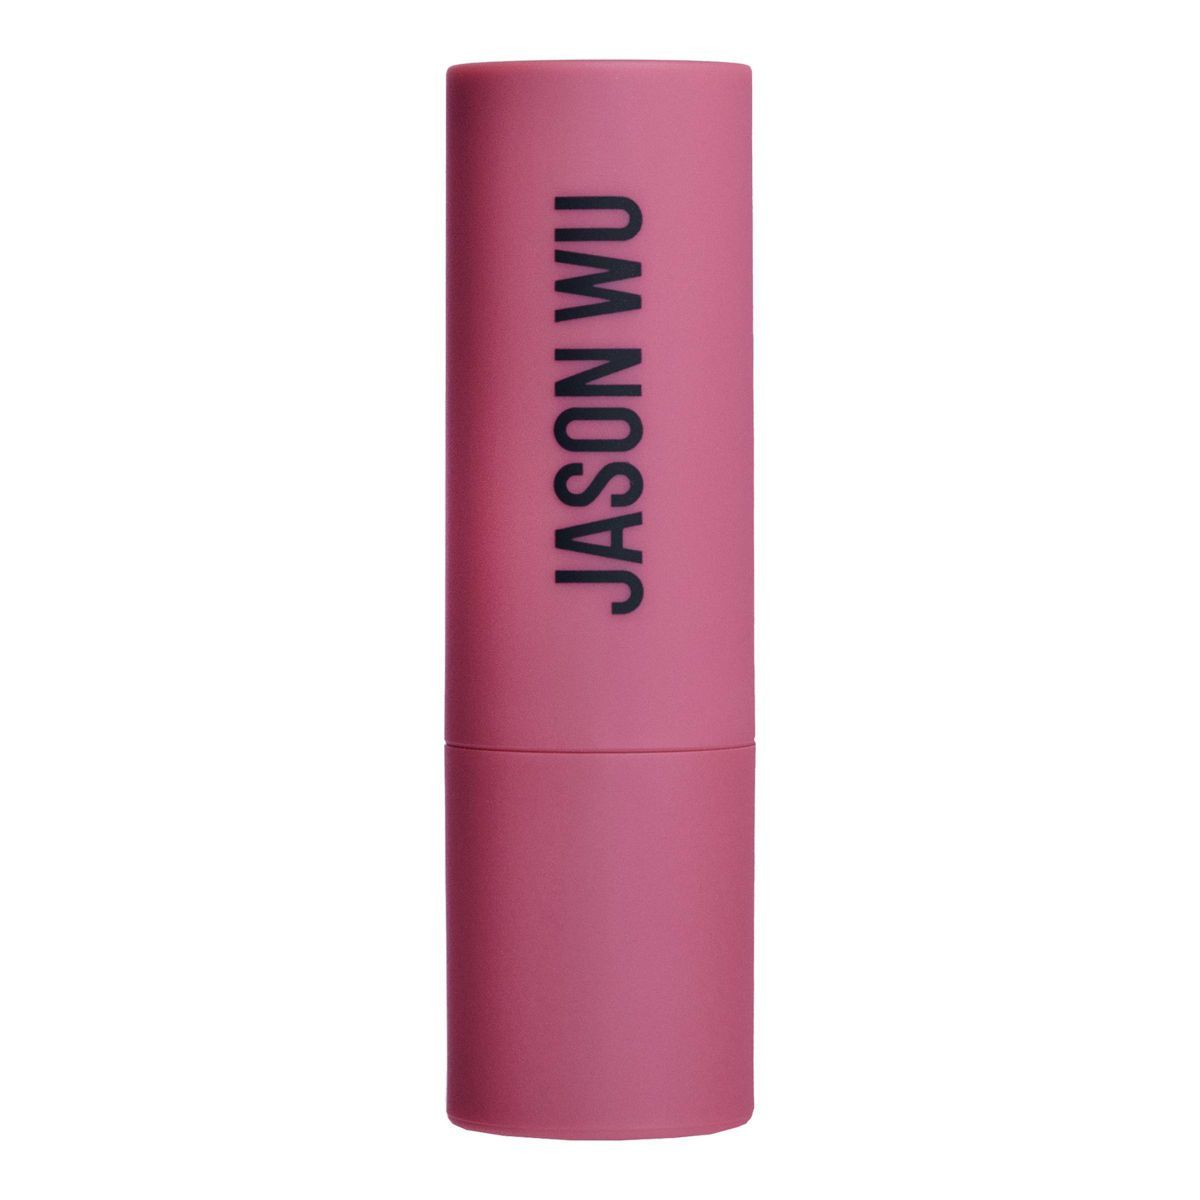 Jason Wu Beauty Hot Fluff Lipstick - Souffle - 0.134oz | Target